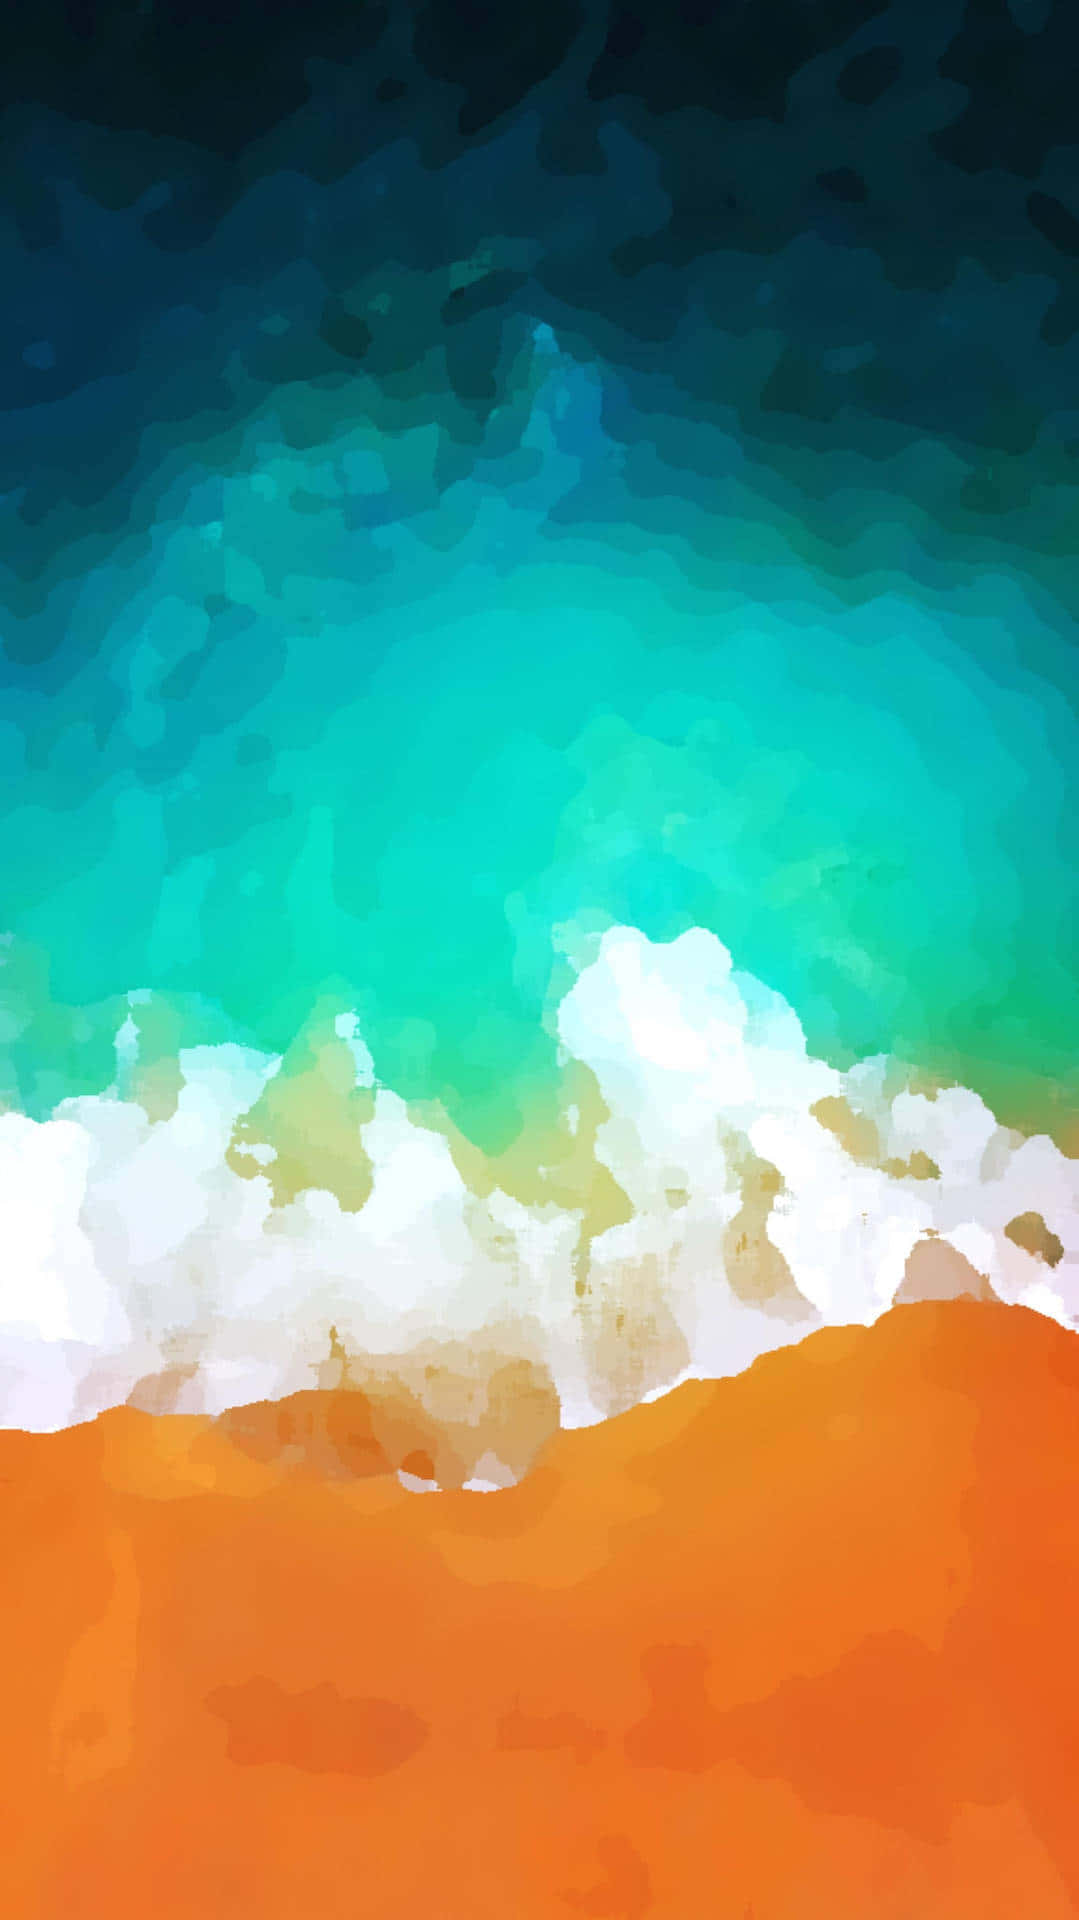 Abstract Aquaand Orange Watercolor Background Wallpaper